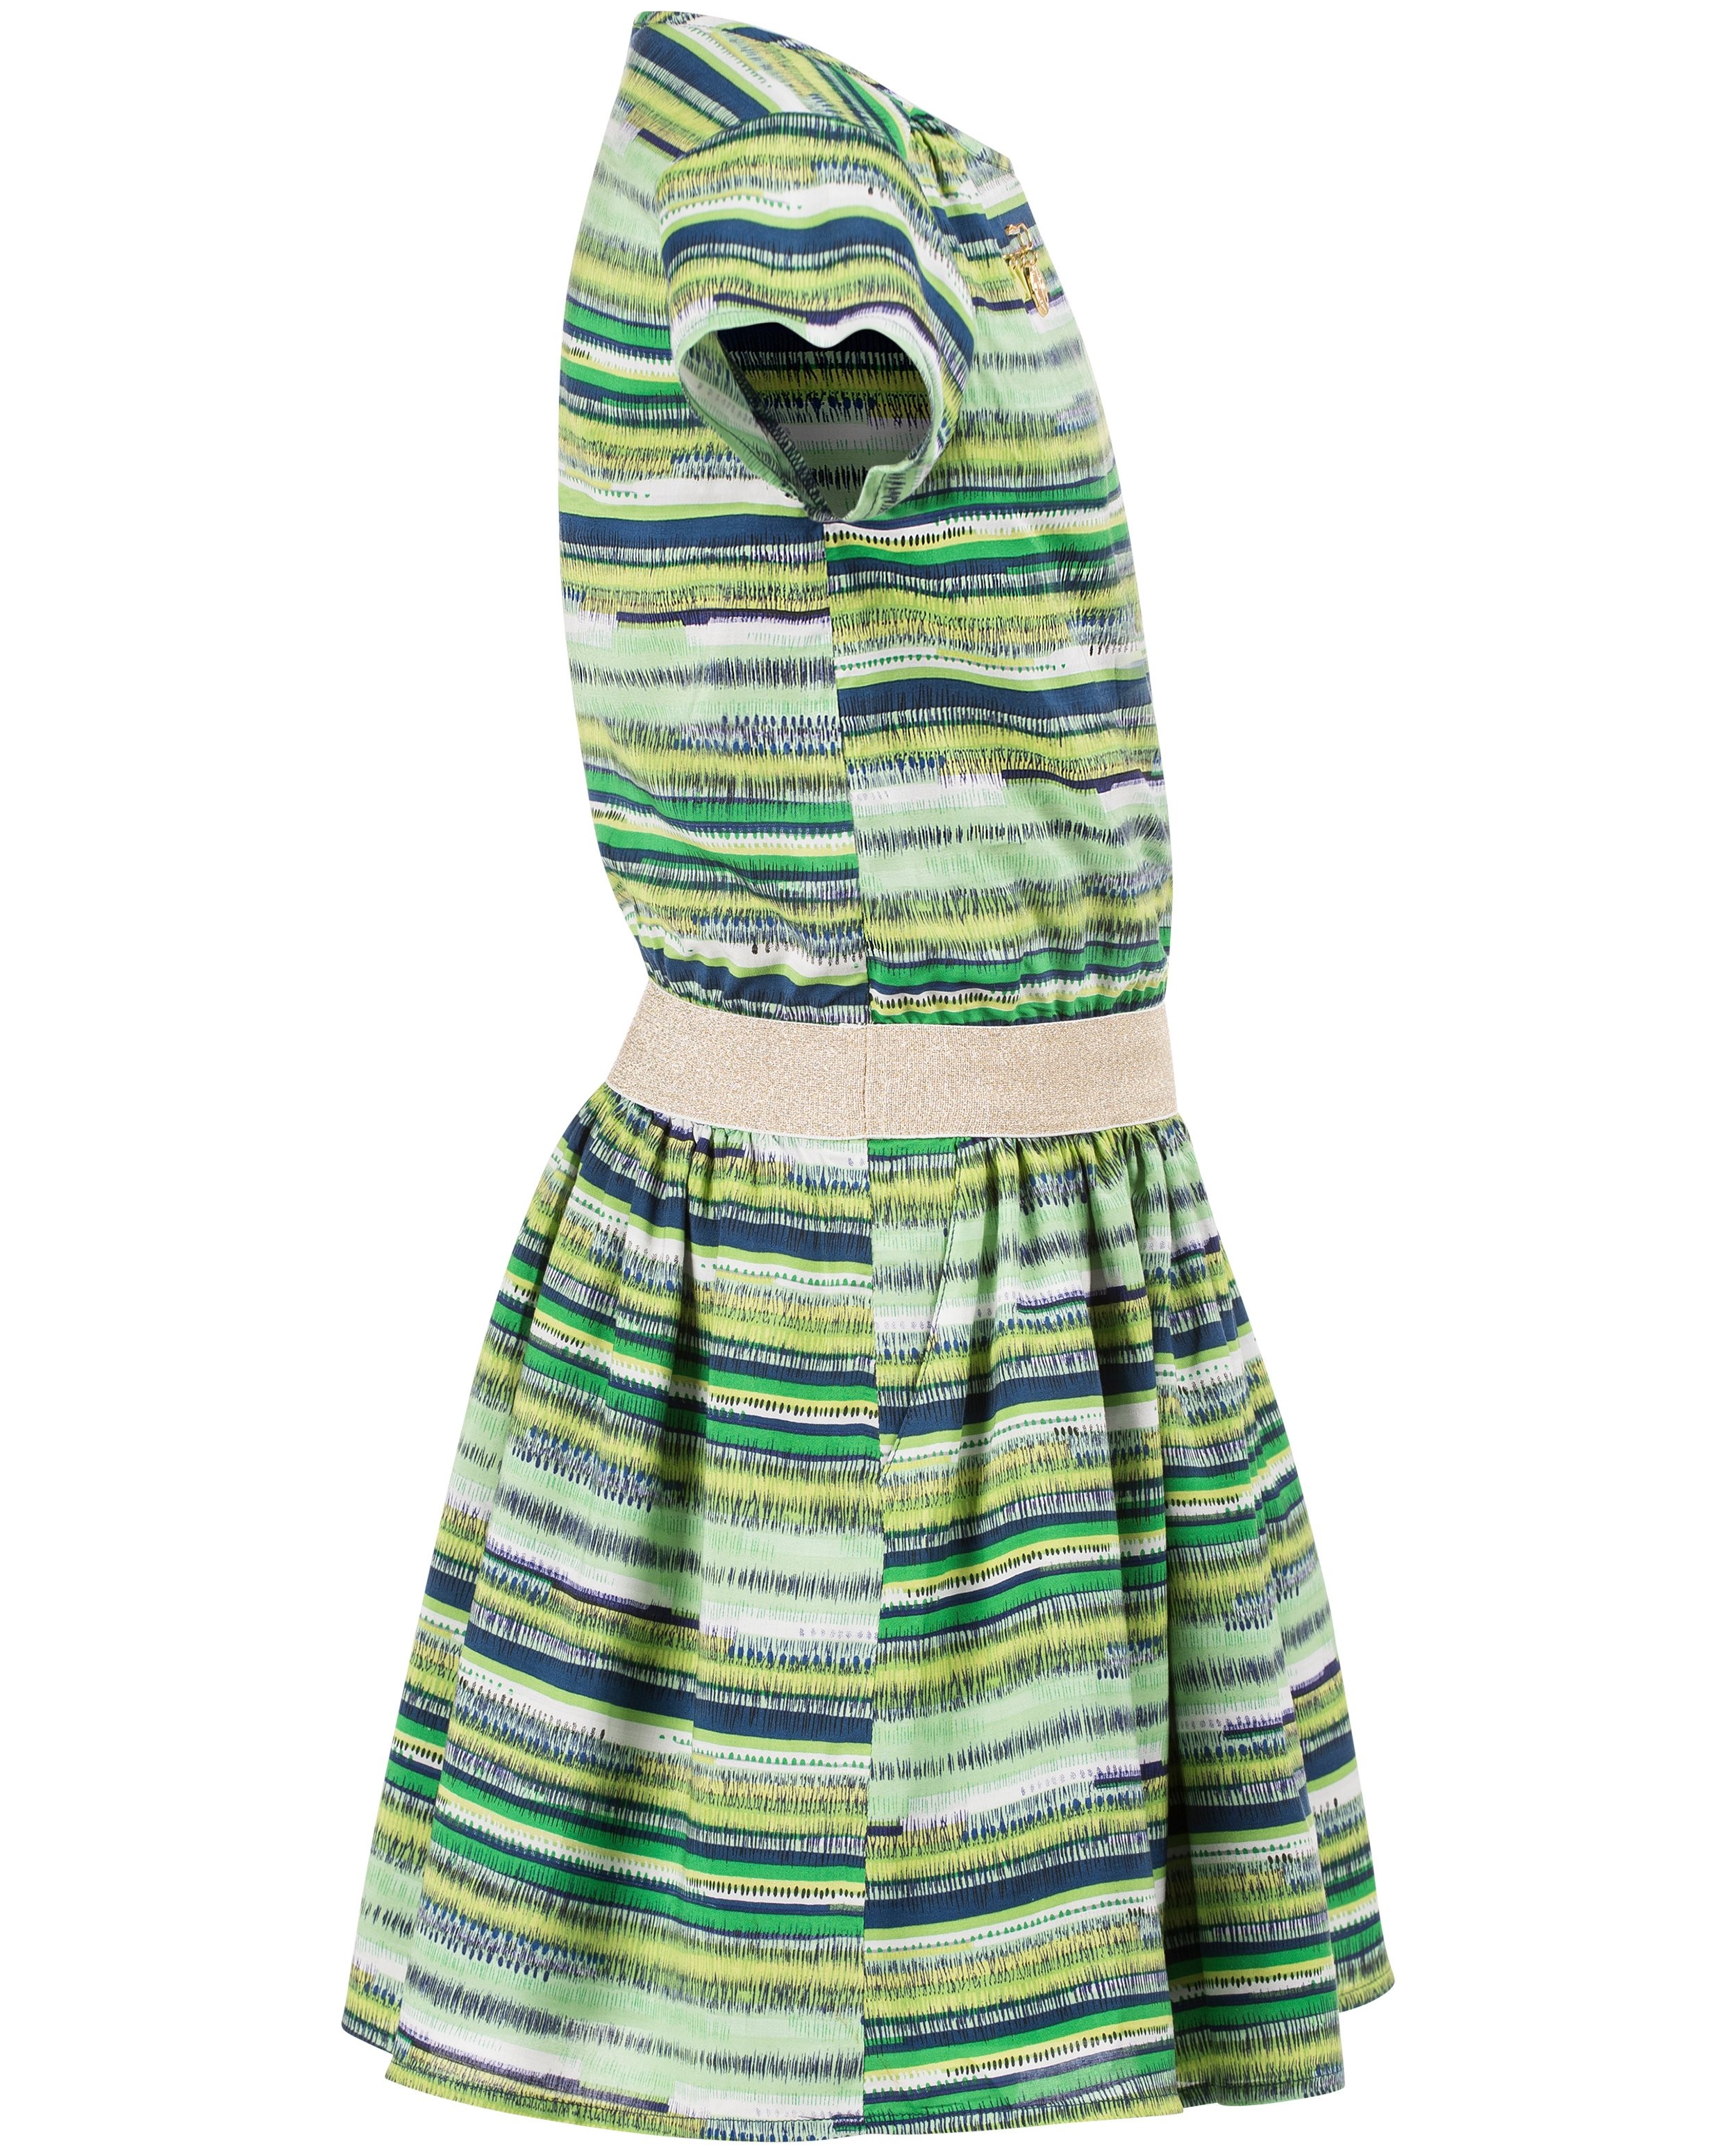 Kleedjes - Groene gestreepte jurk